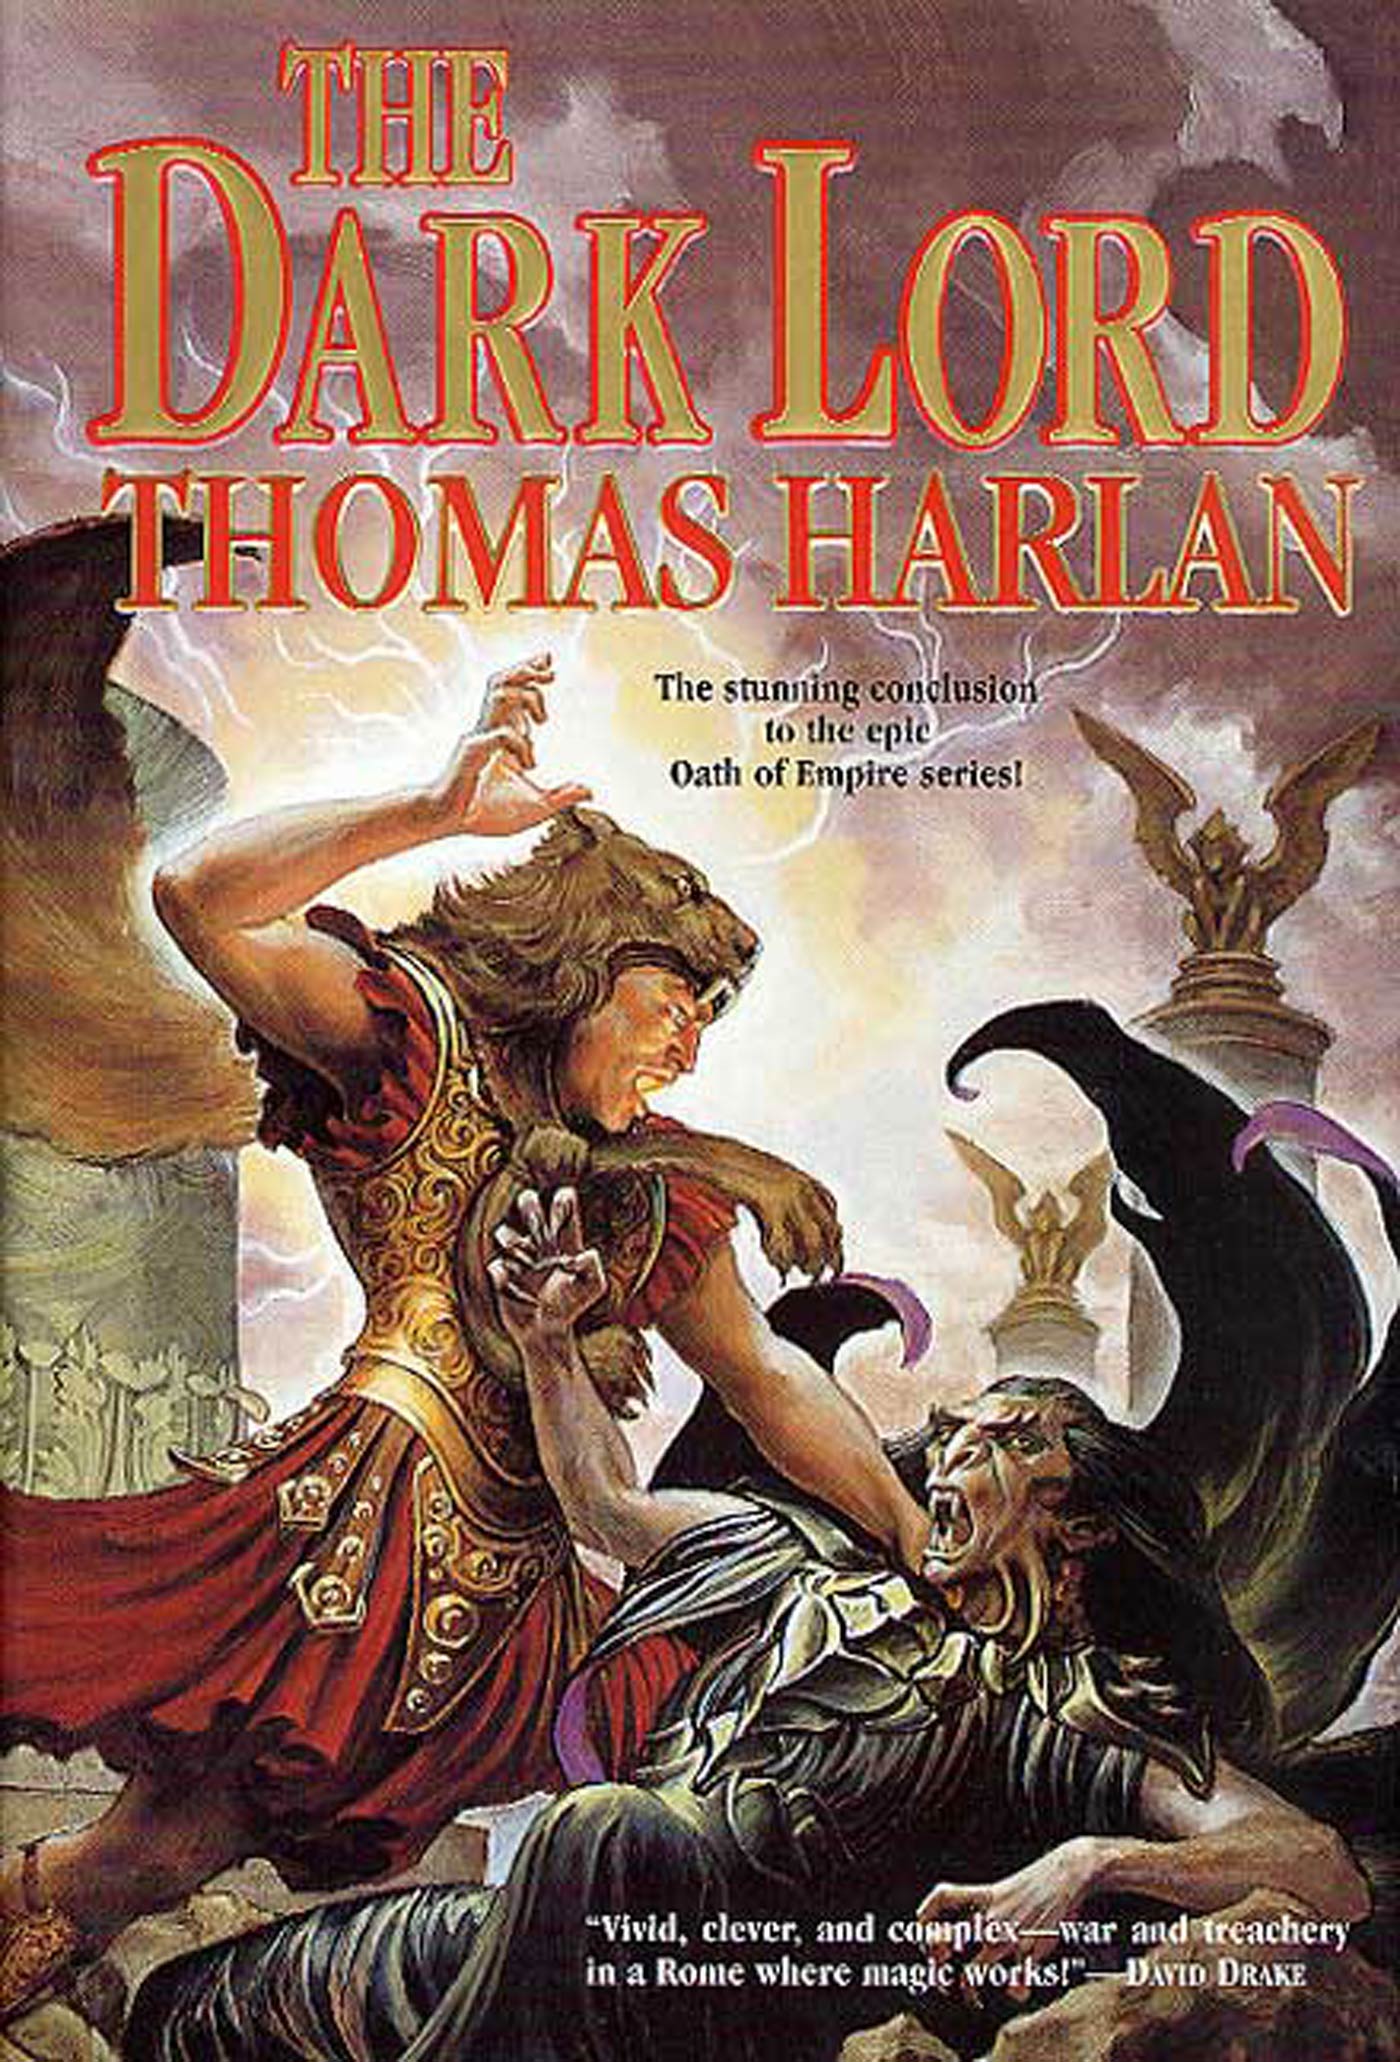 The Dark Lord by Thomas Harlan